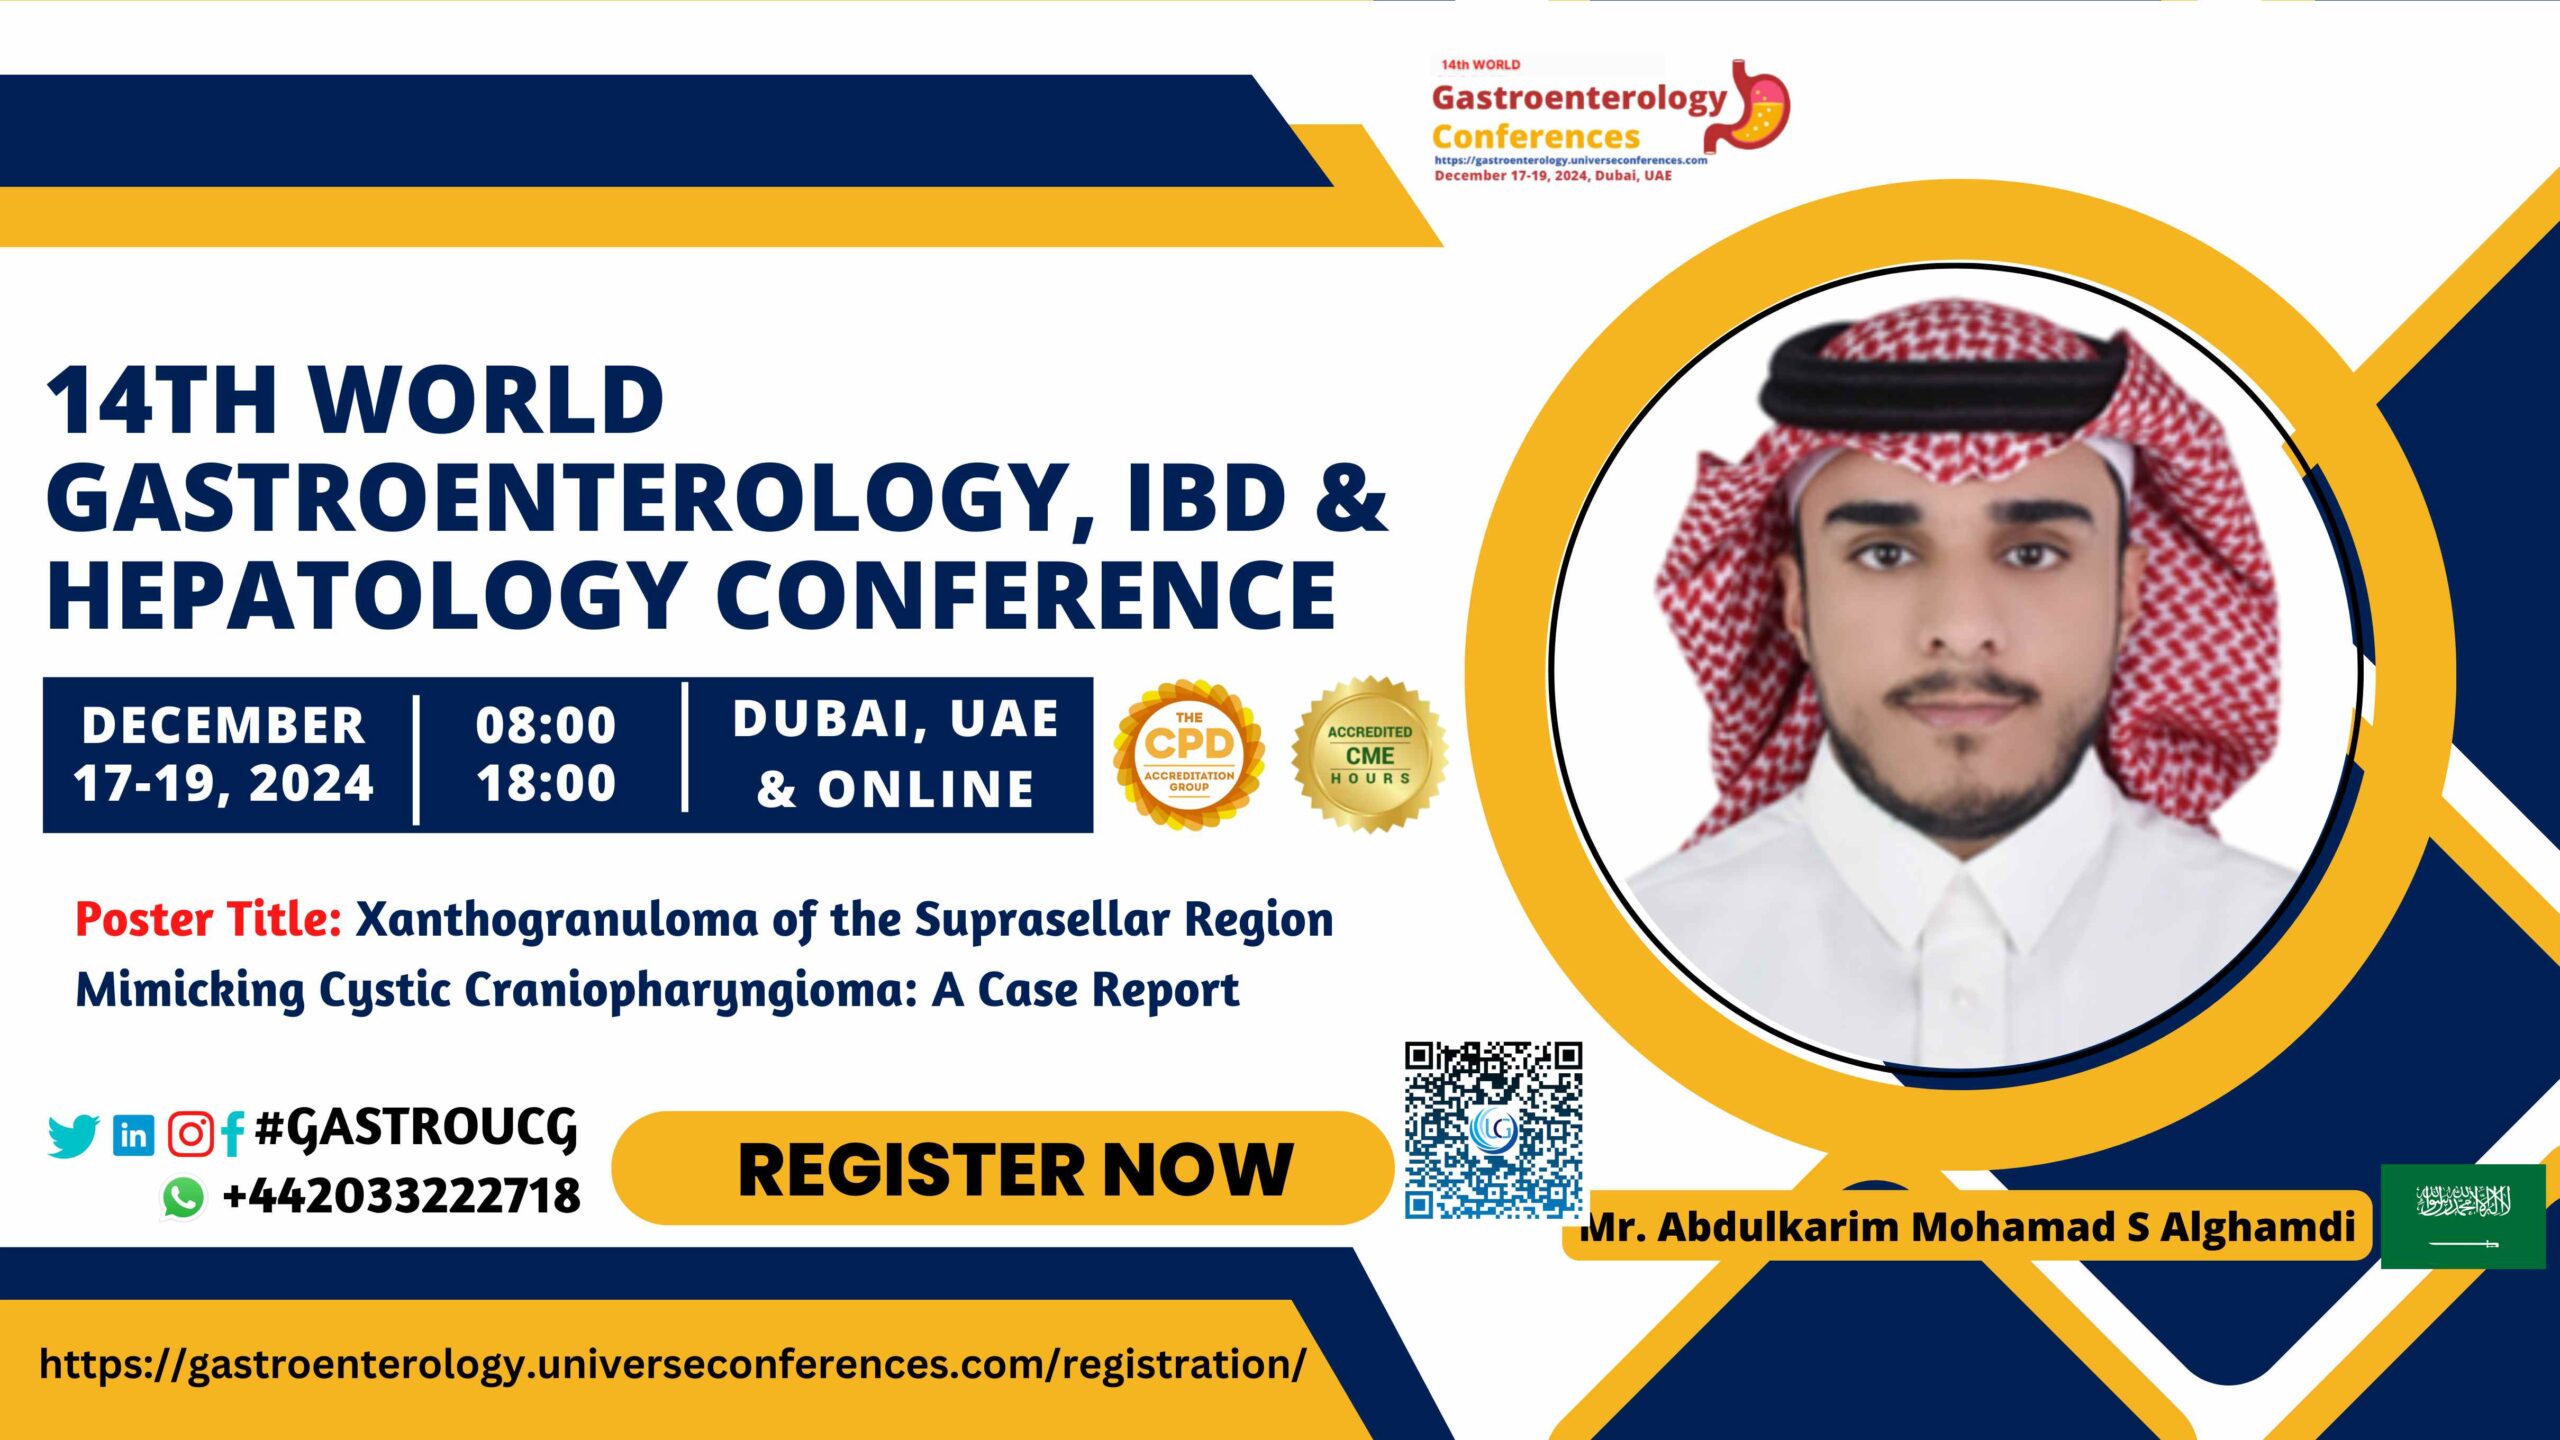 Mr. Abdulkarim Mohamad S Alghamdi _14th World Gastroenterology, IBD & Hepatology Conference